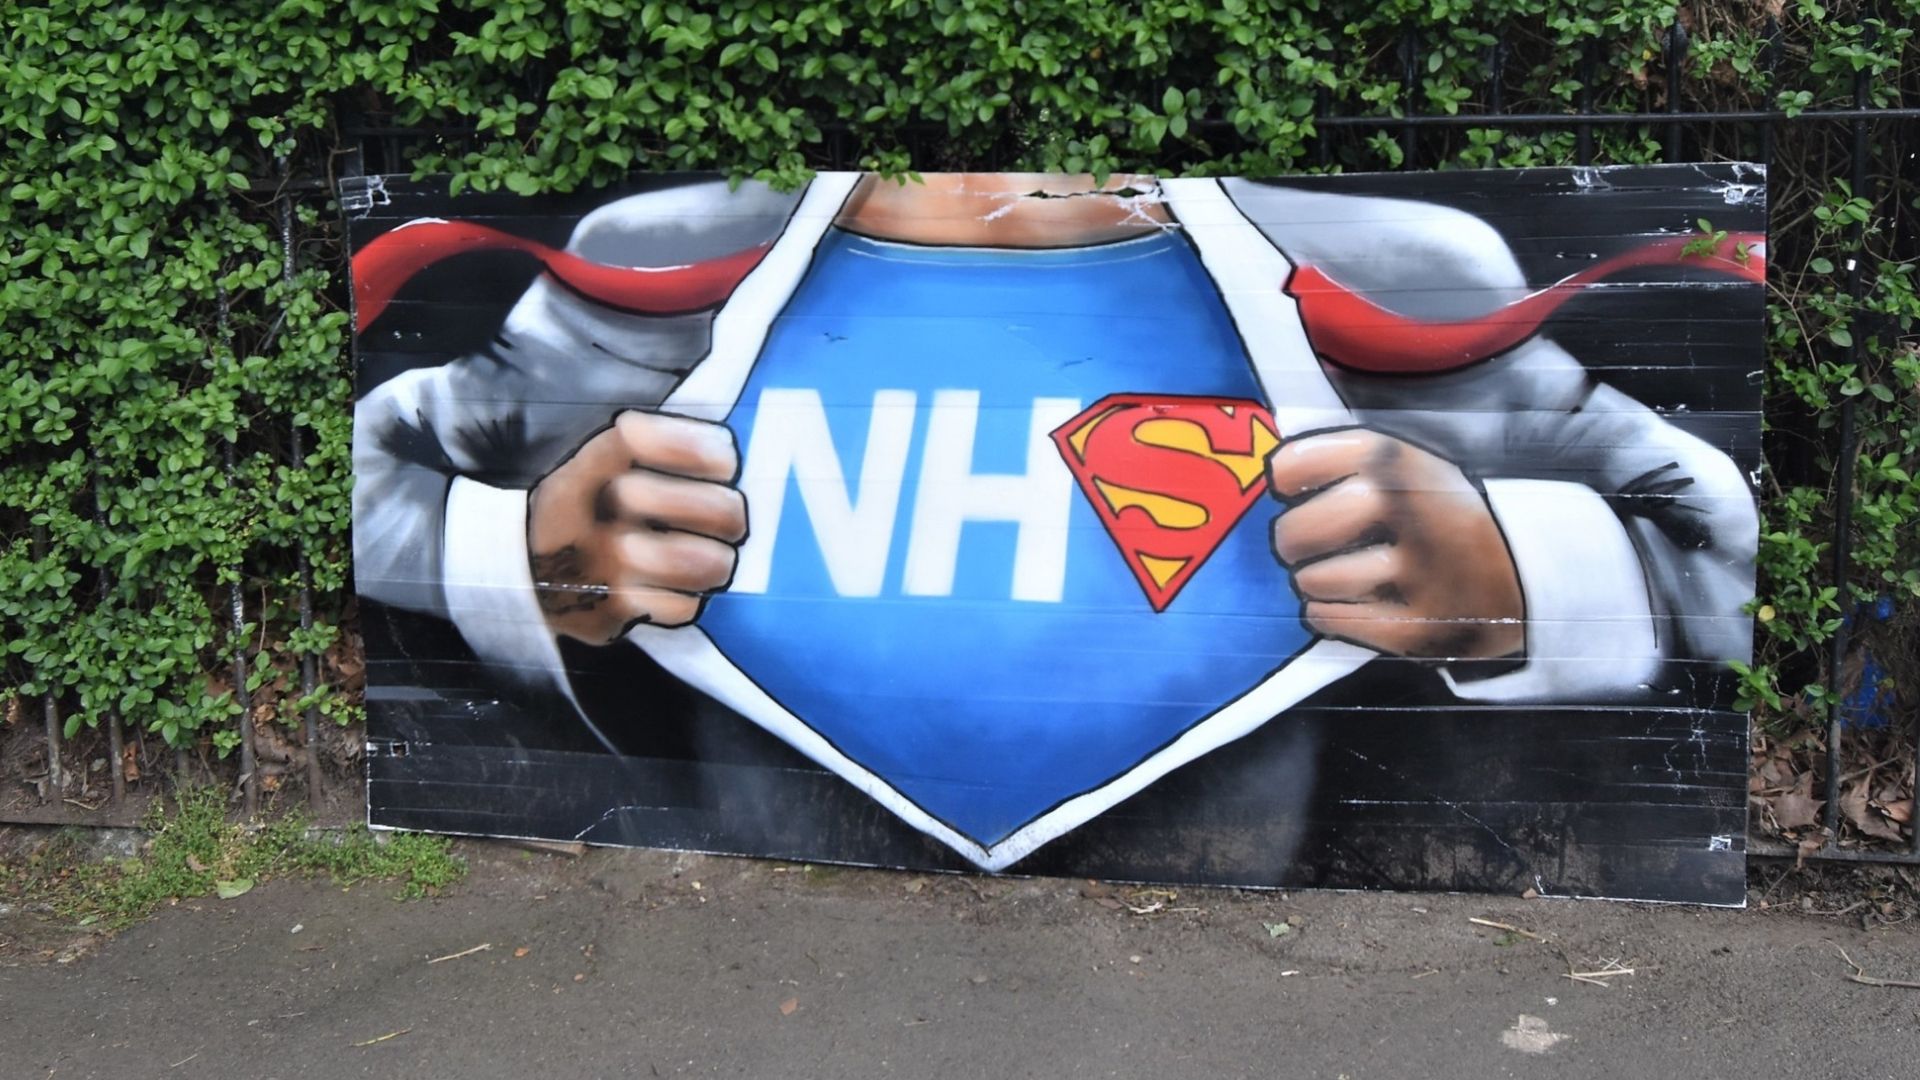 NHS superhero street art on Hilly Fields, Brockley, South London